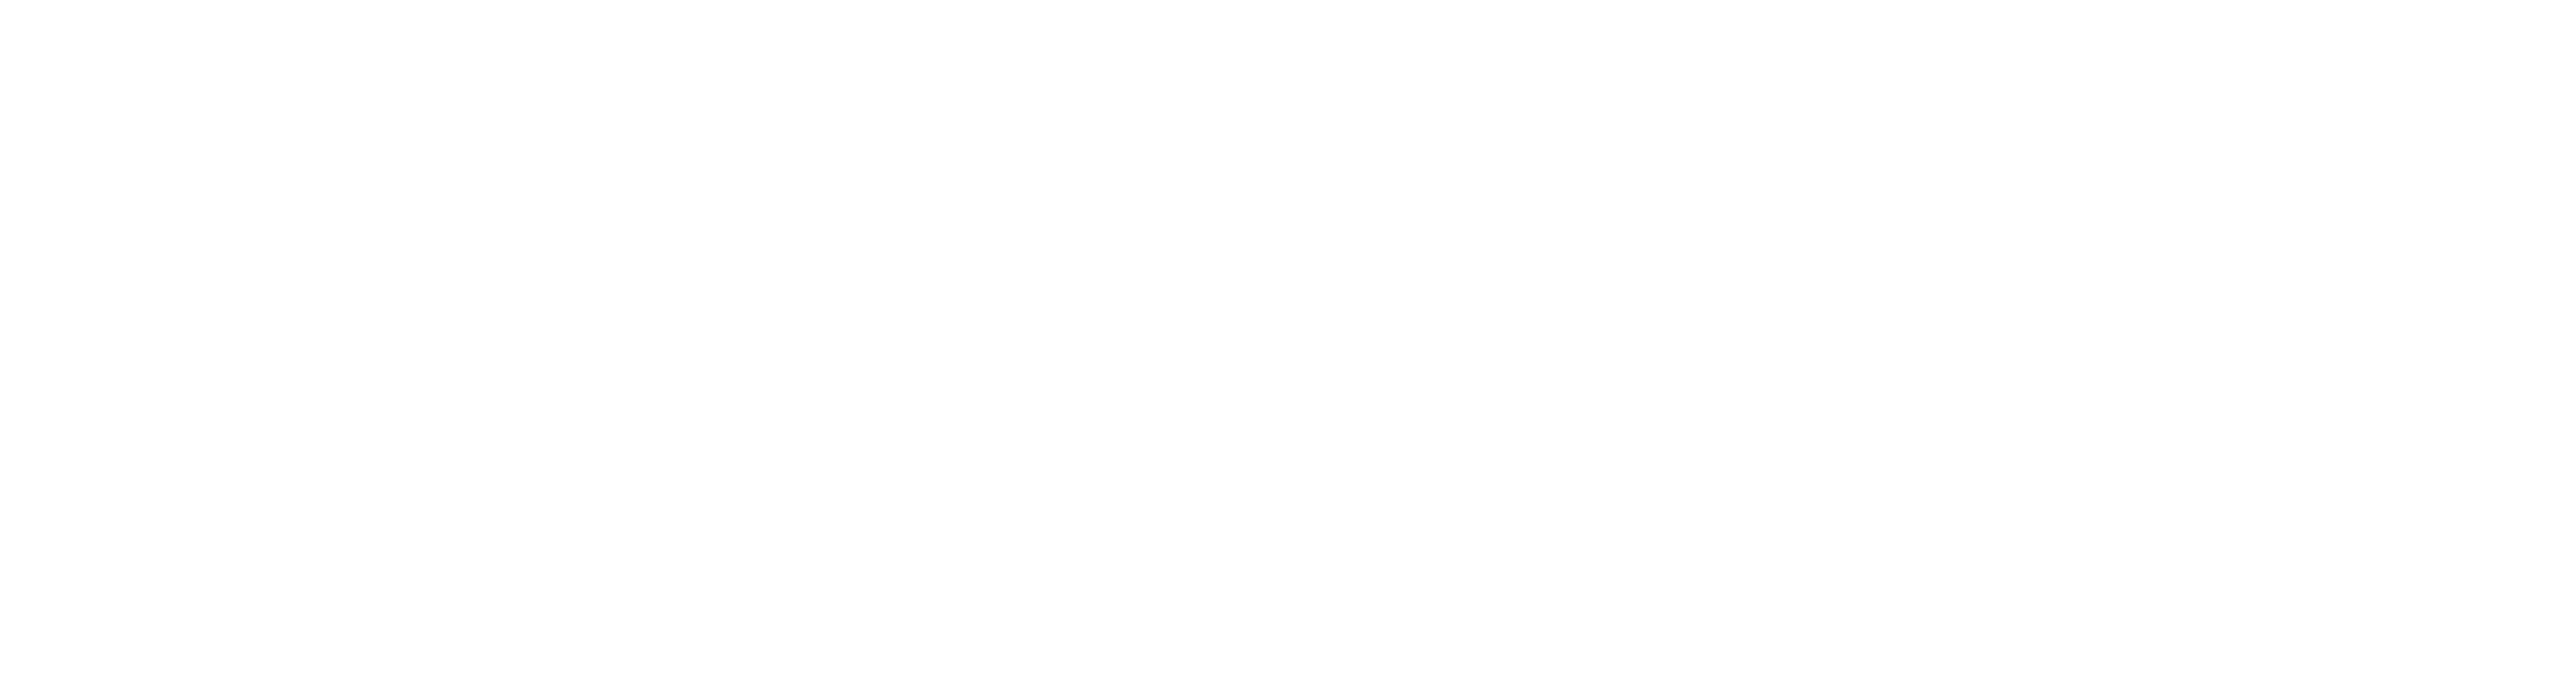 Gordon, Gino and Fred's Road Trip logo